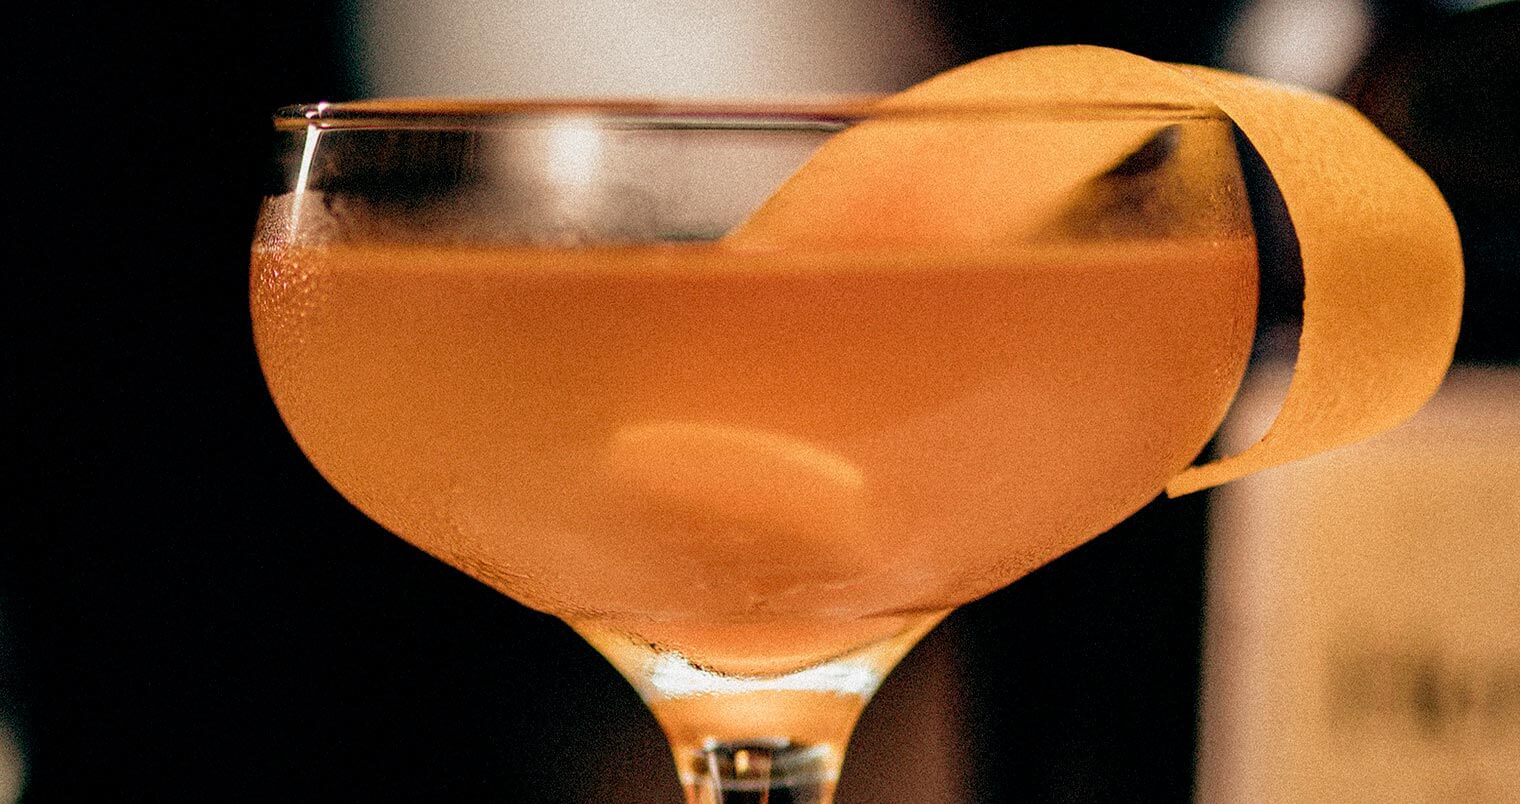 Cognac Sidecar, cocktail with orange peel garnish, featured image